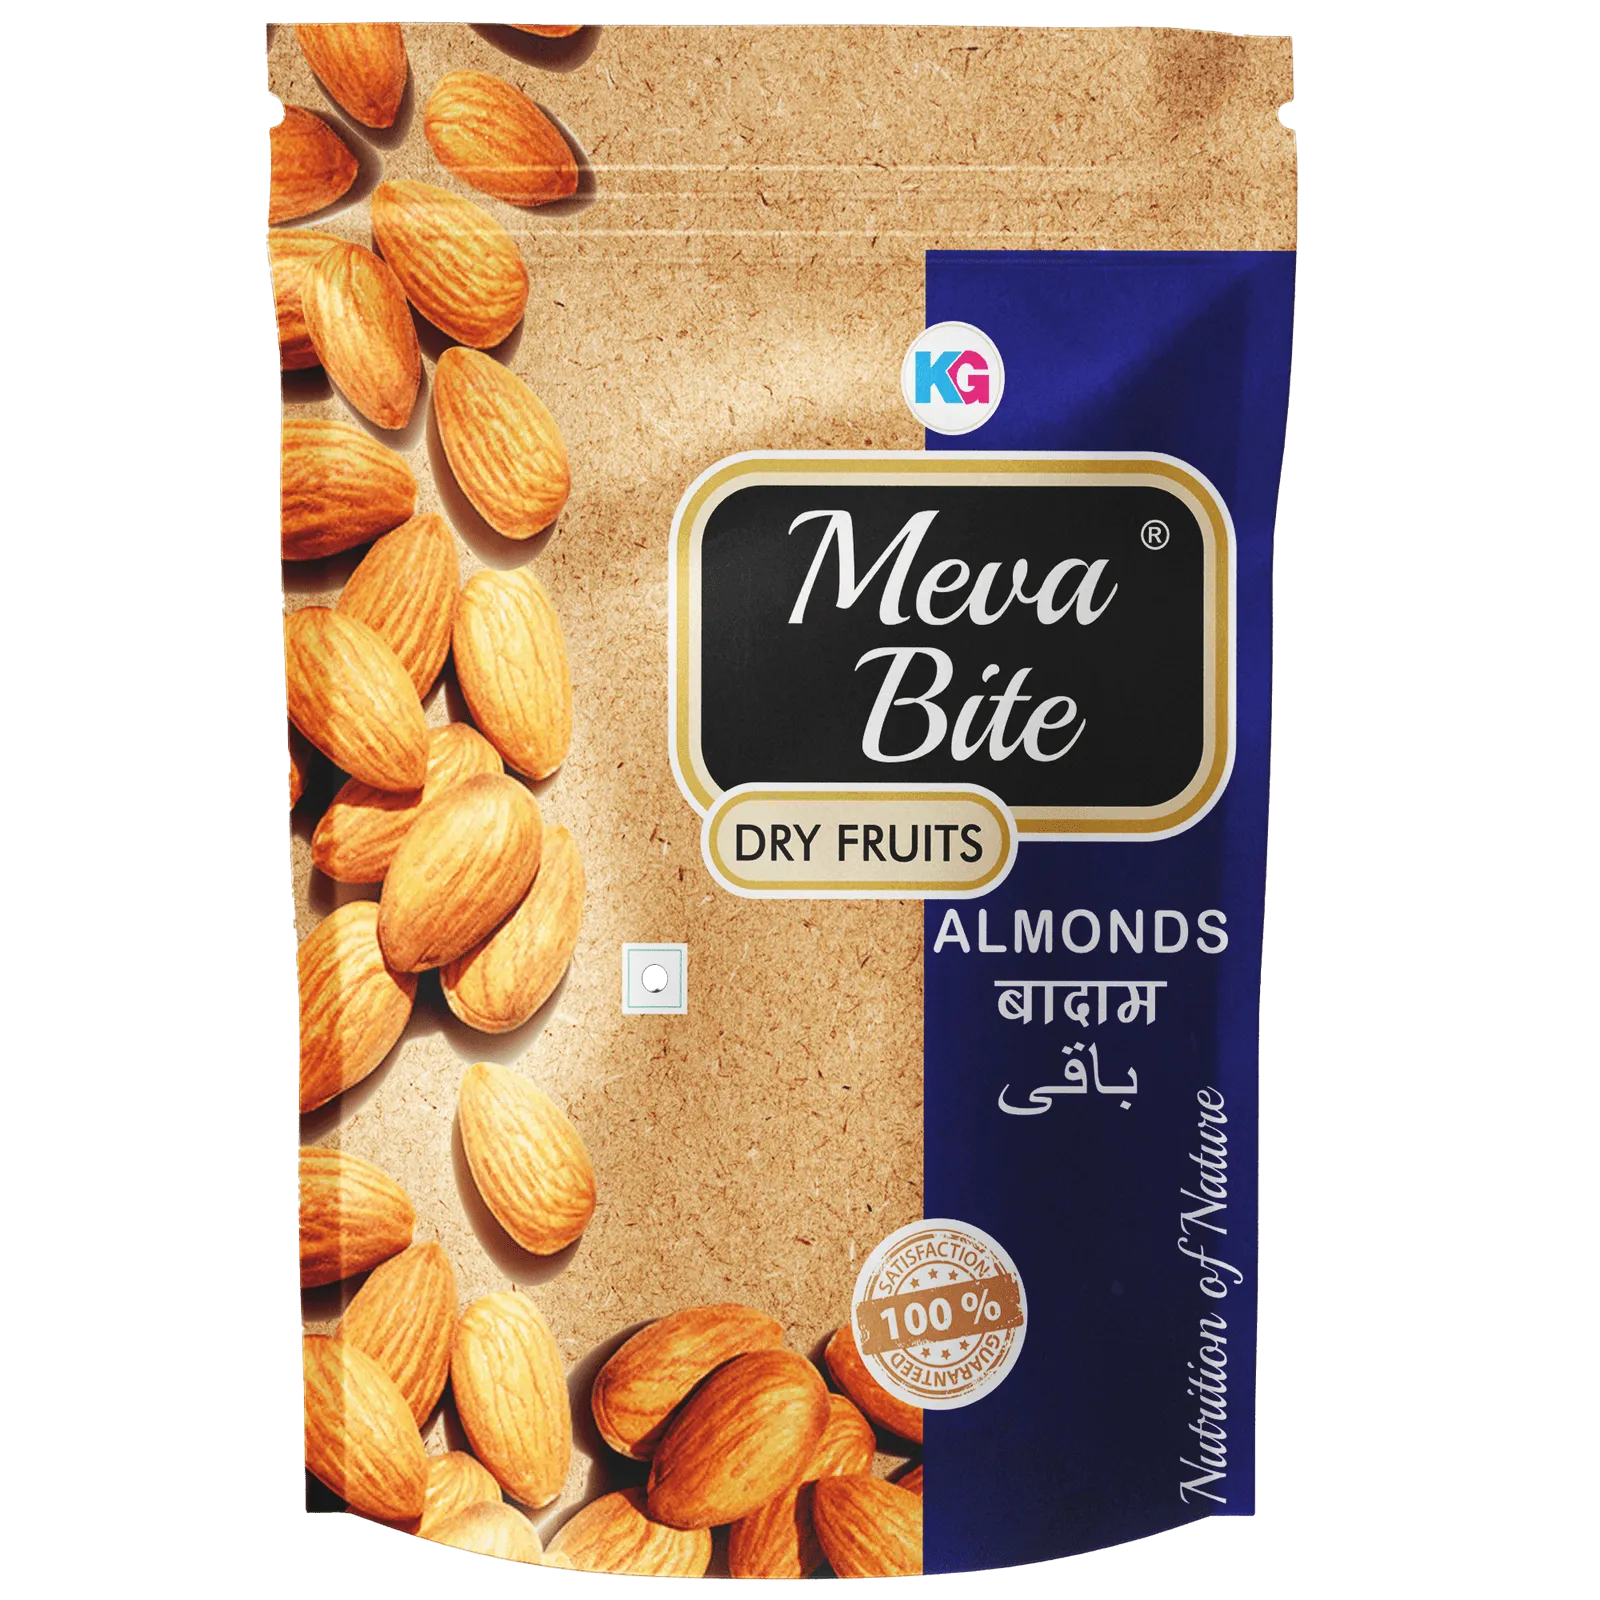 California Almonds, Dry-Fruit, Nuts & Seeds, MevaBite